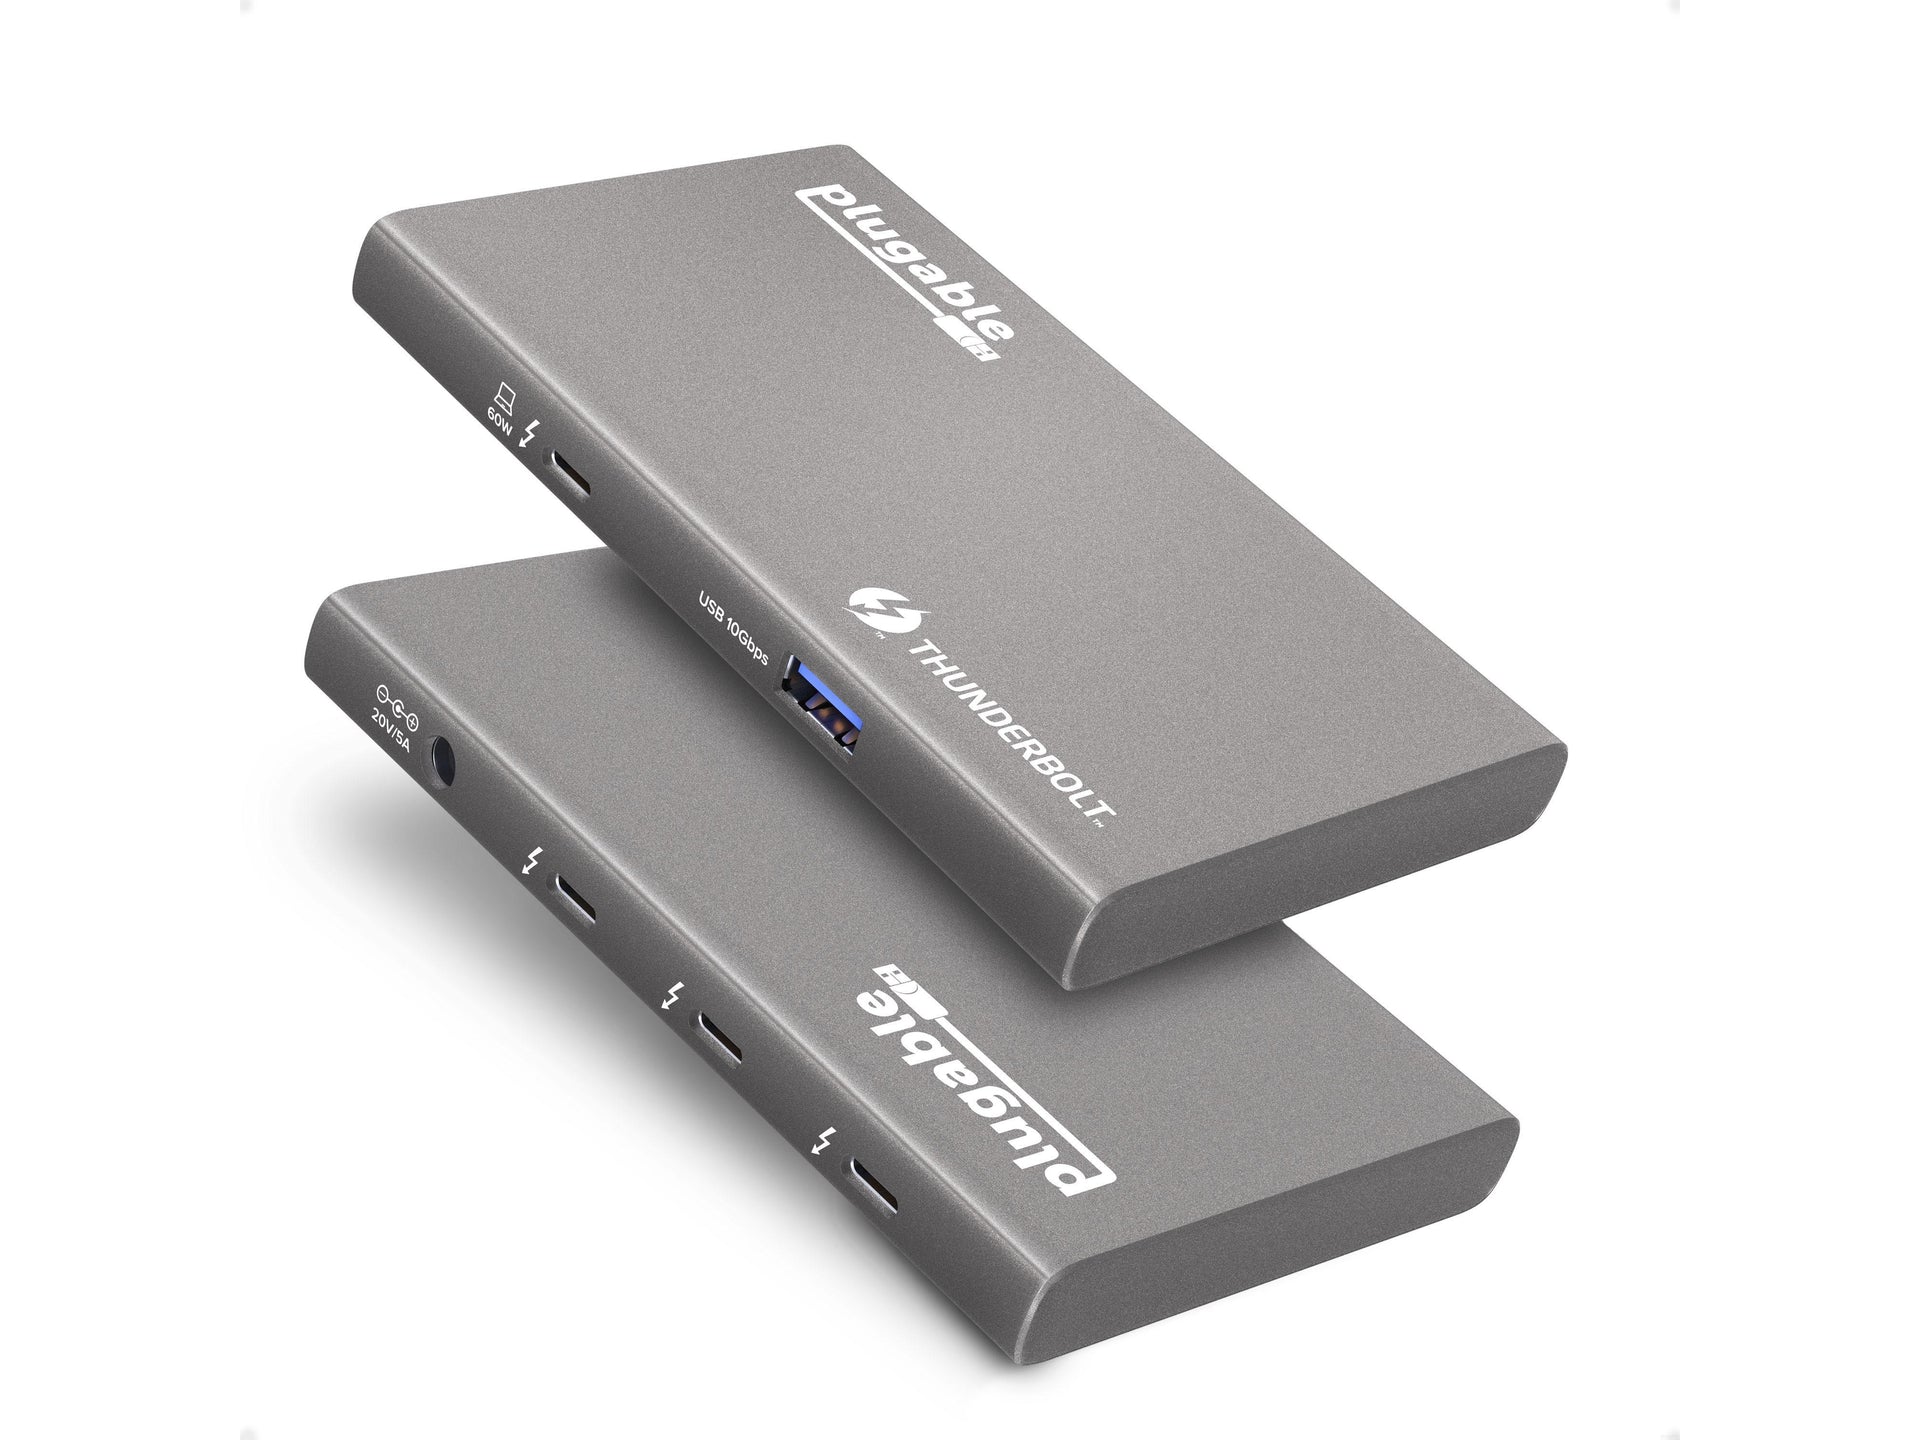 Plugable reveals first Thunderbolt 4 dock, 11 port USB-C hub, 240W